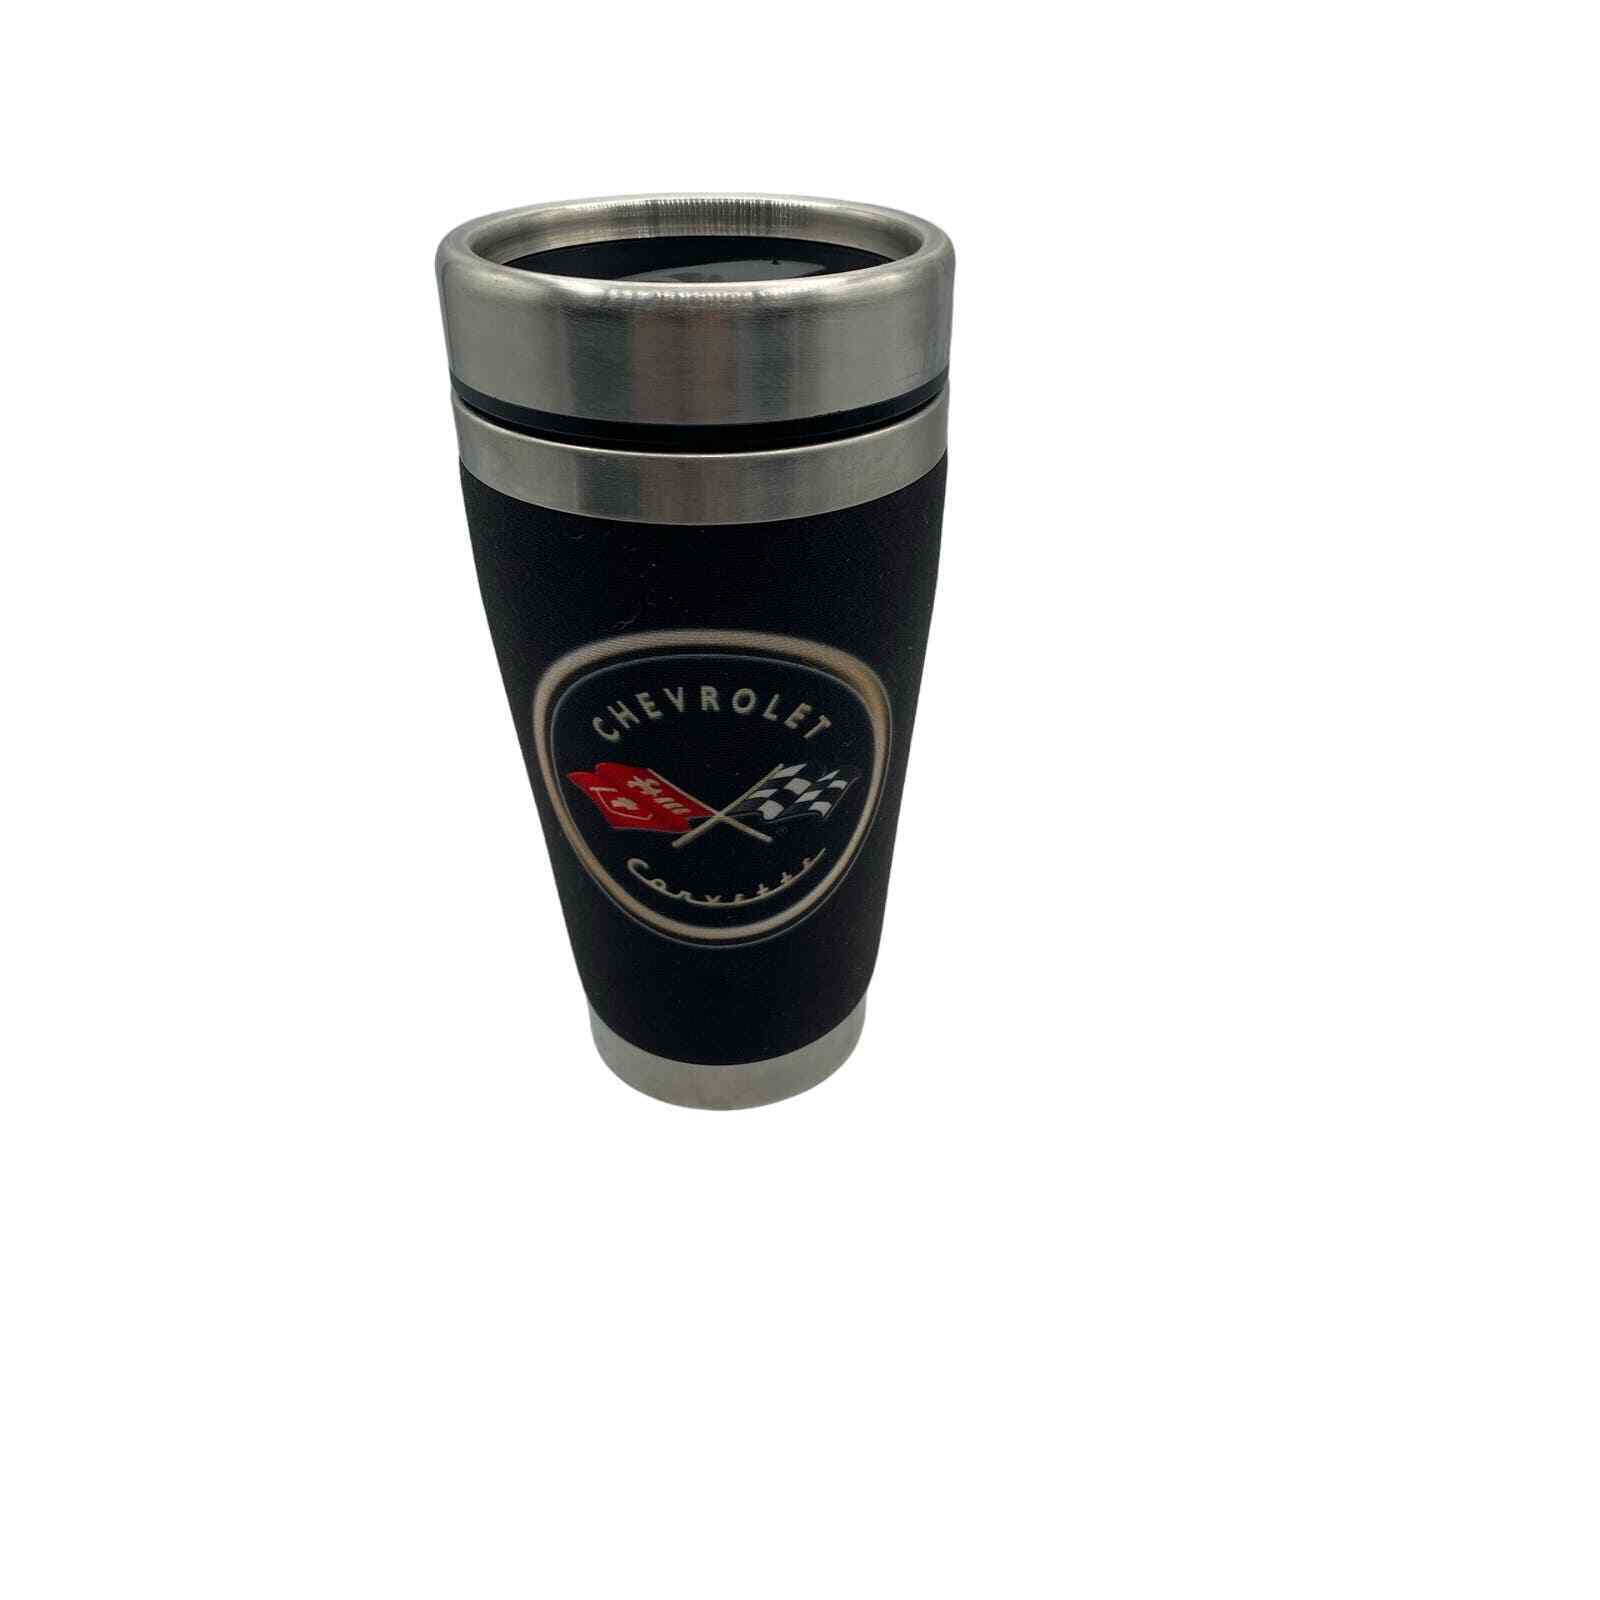 Mugzie Corvette Insulated Coffee Travel Mug Cup Made in USA 16 oz.